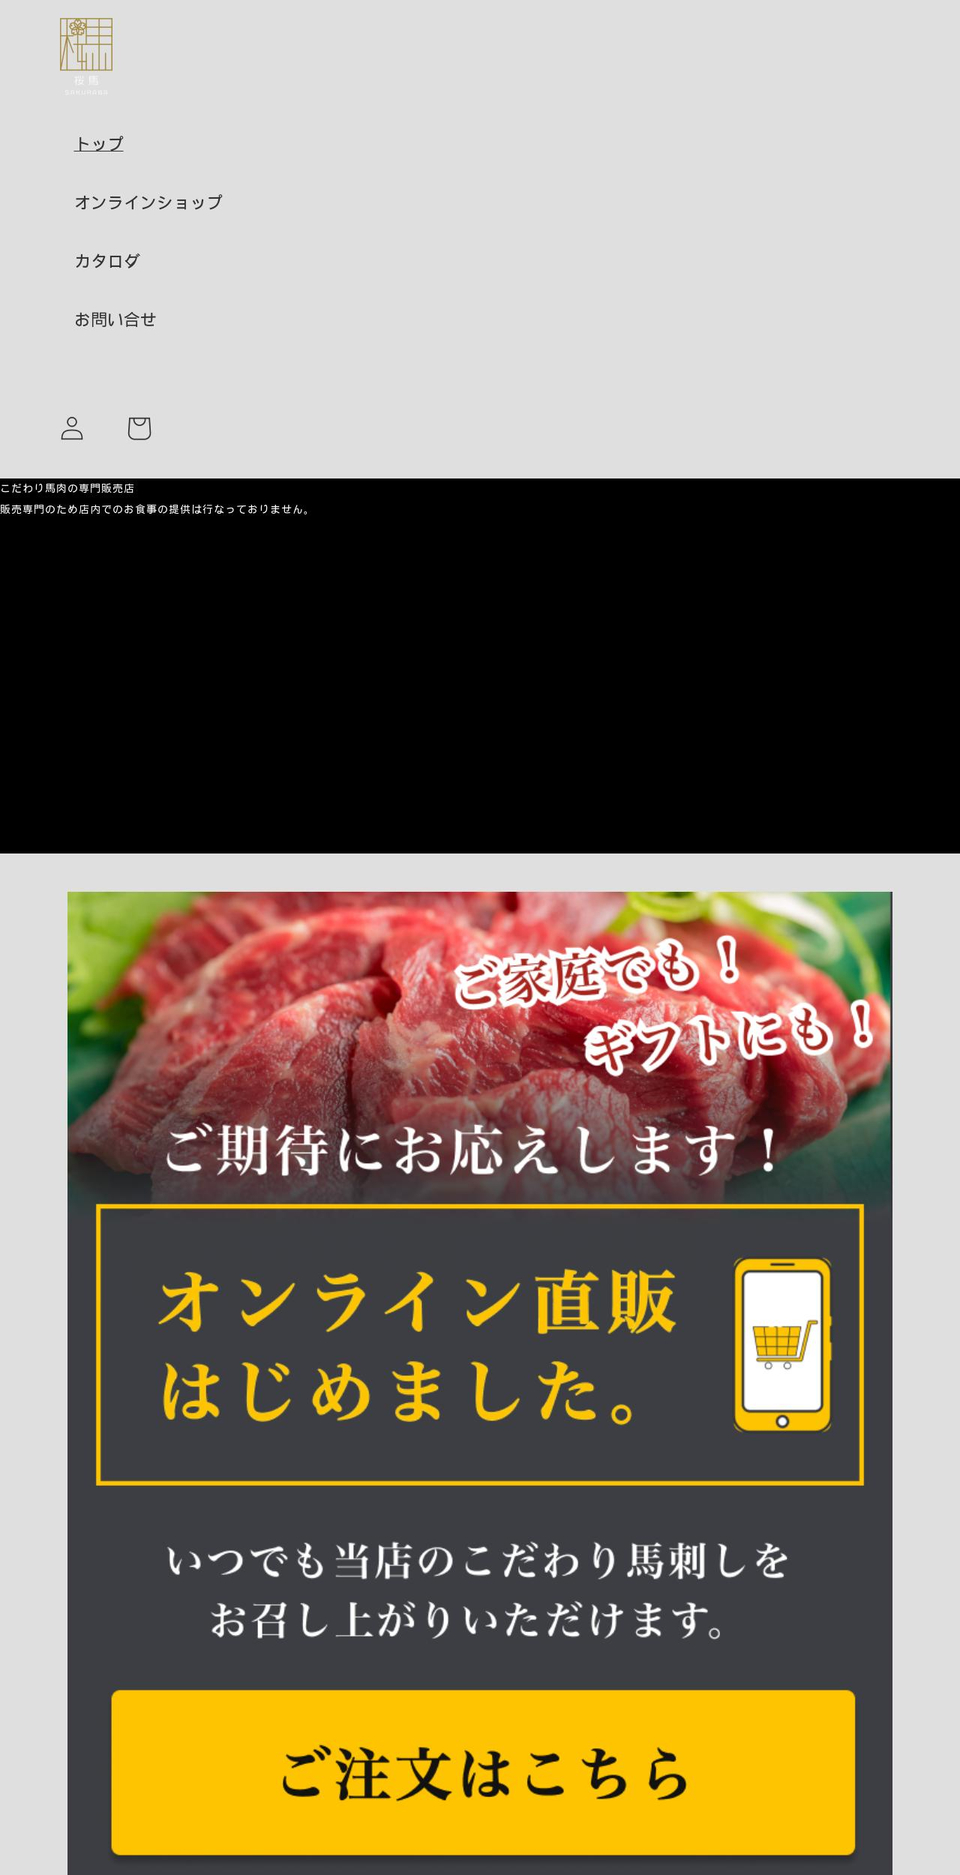 sakuraba.shop shopify website screenshot